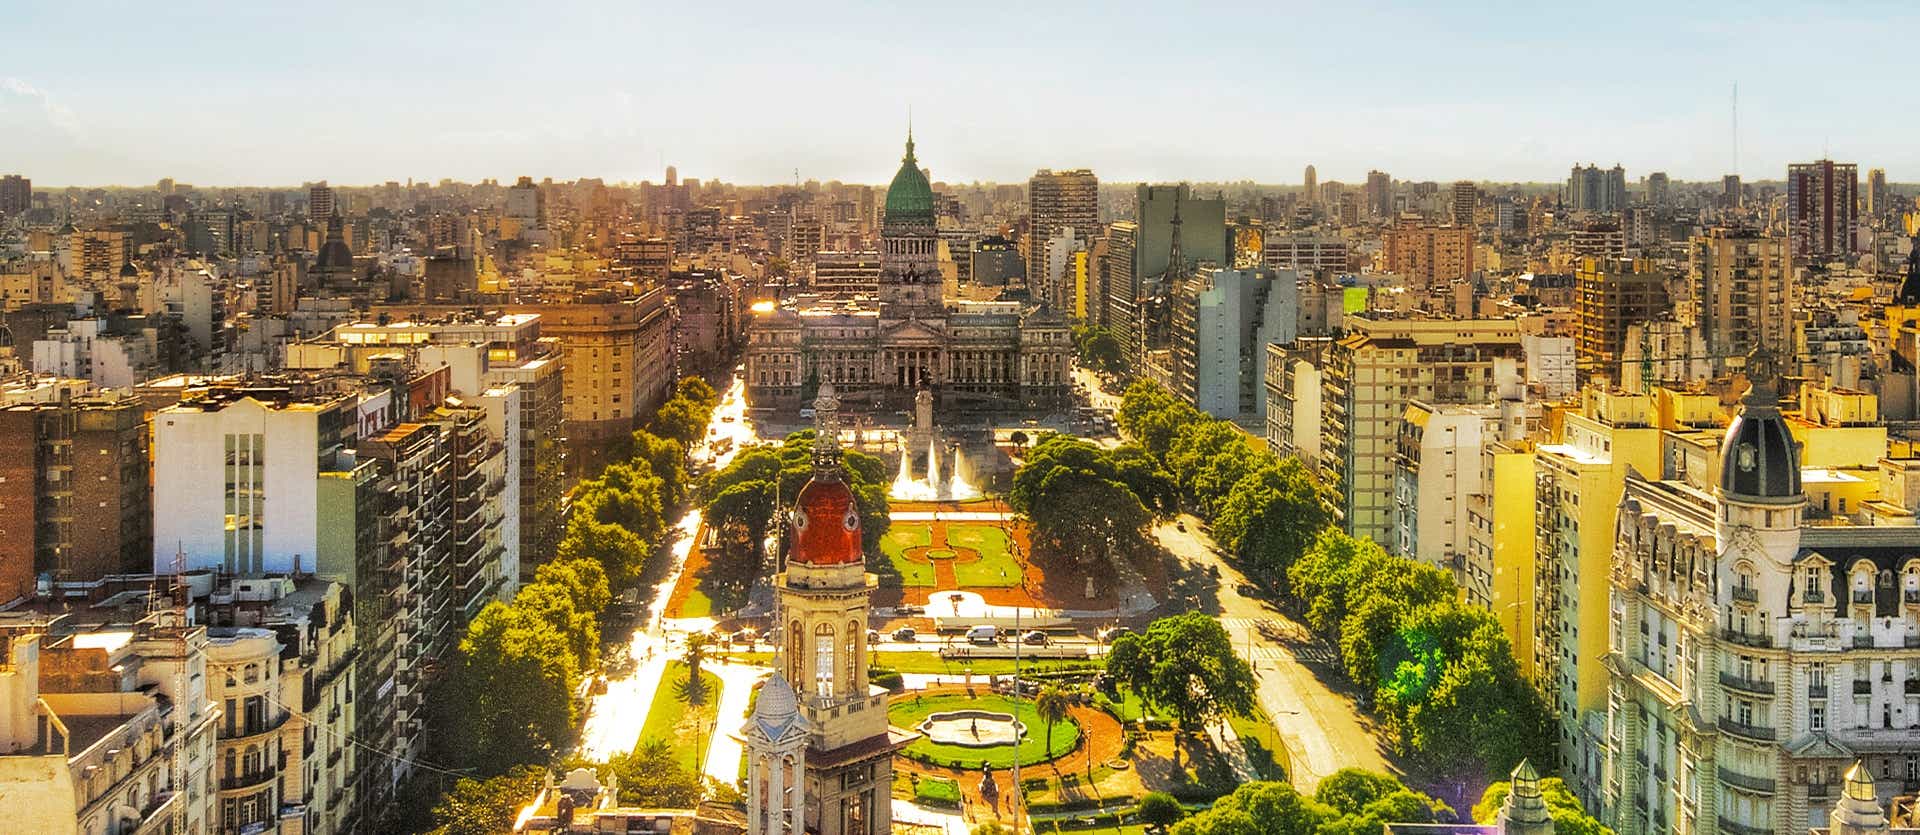 Panoramic View of Buenos Aires <span class="iconos separador"></span> Argentina